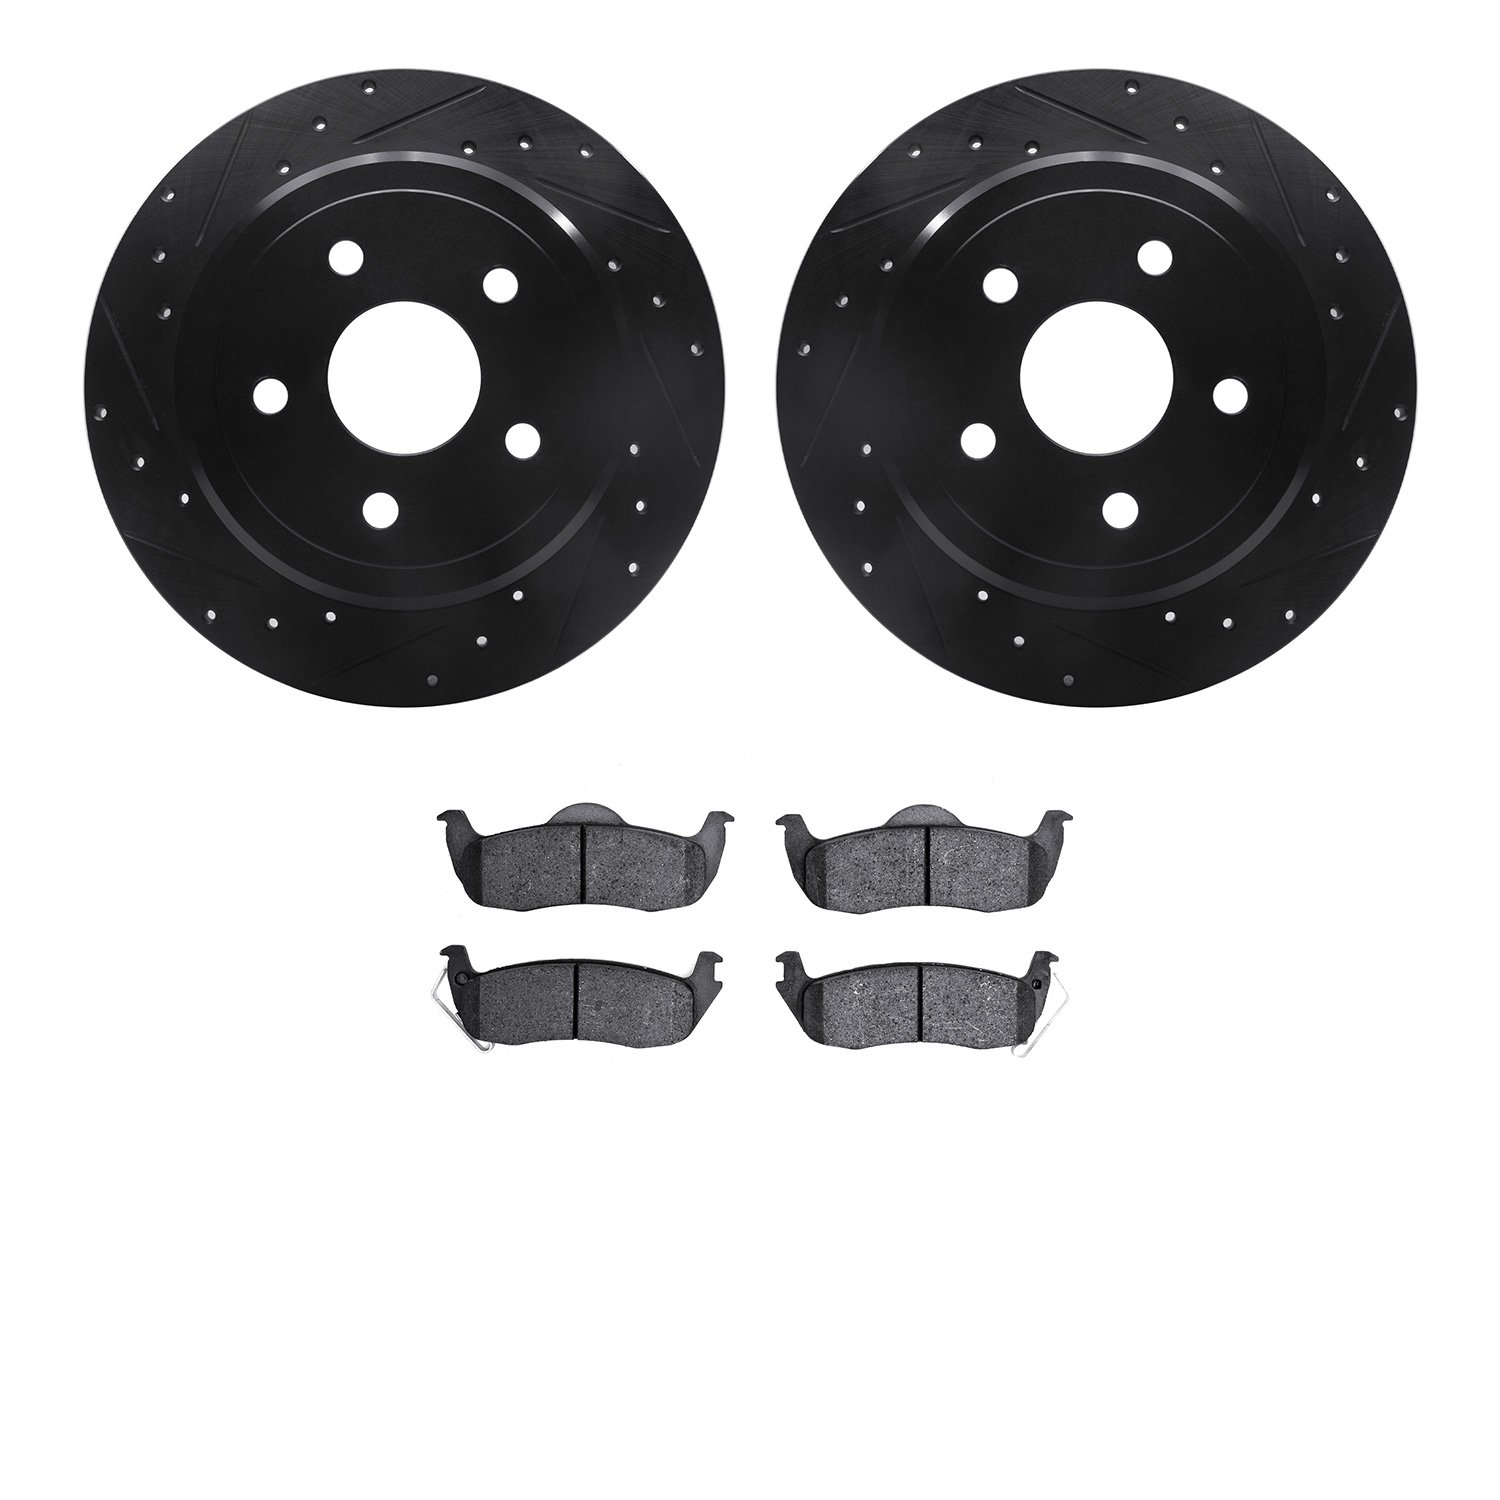 8402-42002 Drilled/Slotted Brake Rotors with Ultimate-Duty Brake Pads Kit [Black], 2005-2010 Mopar, Position: Rear